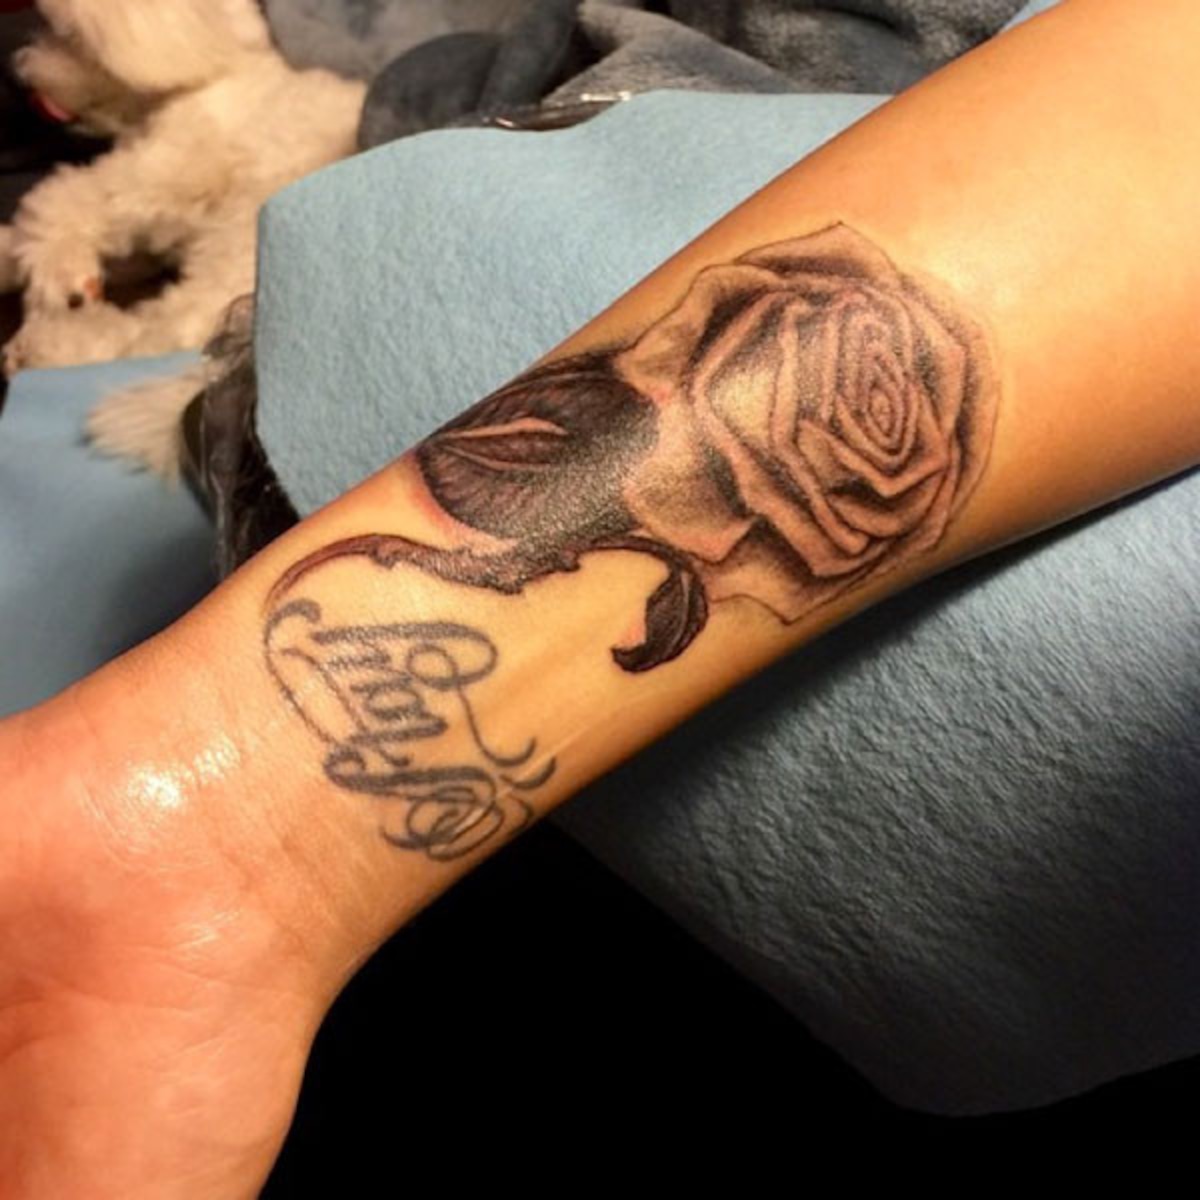 Rosen tattoo intim